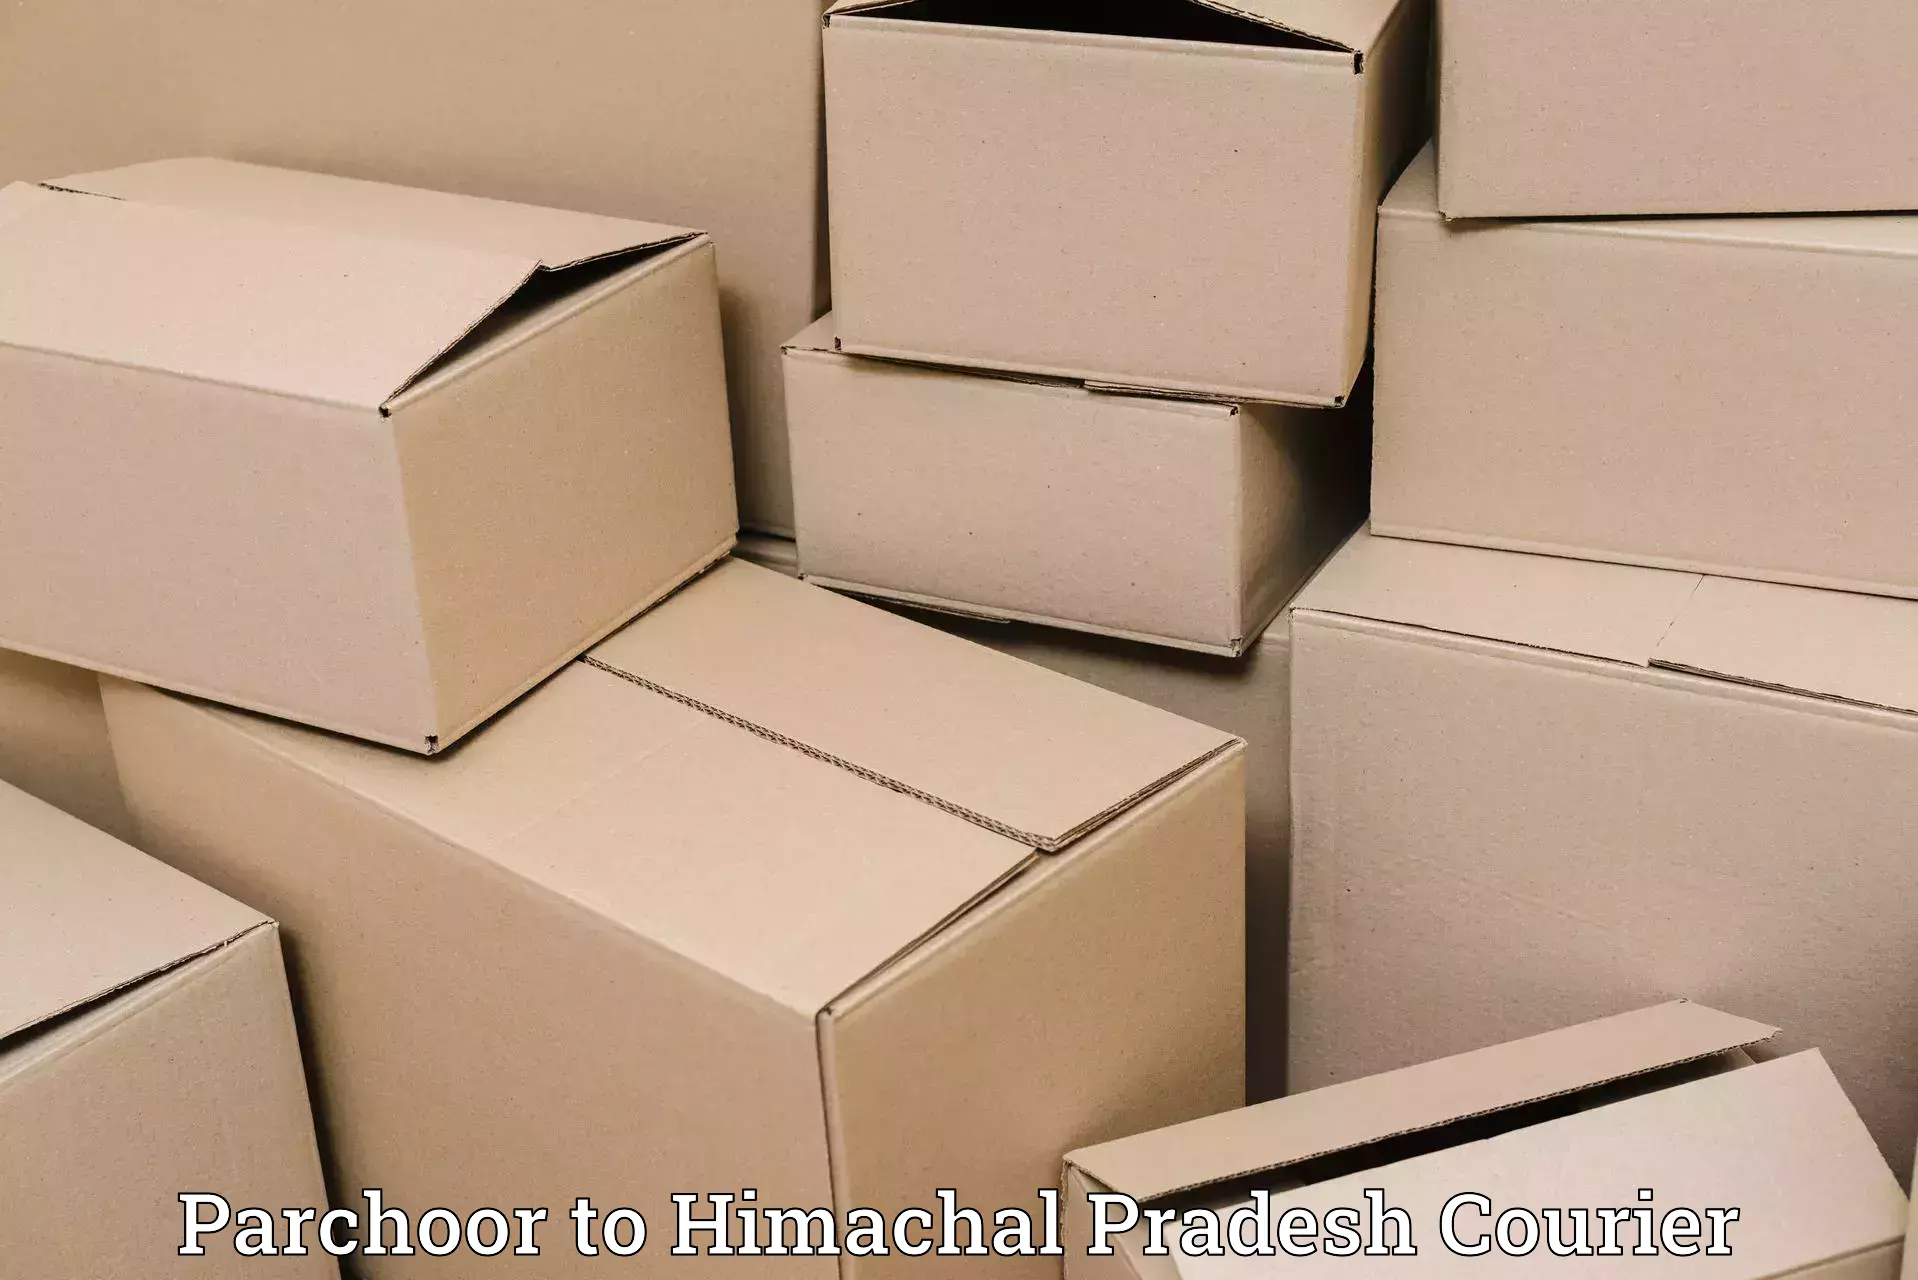 Efficient shipping platforms Parchoor to Himachal Pradesh